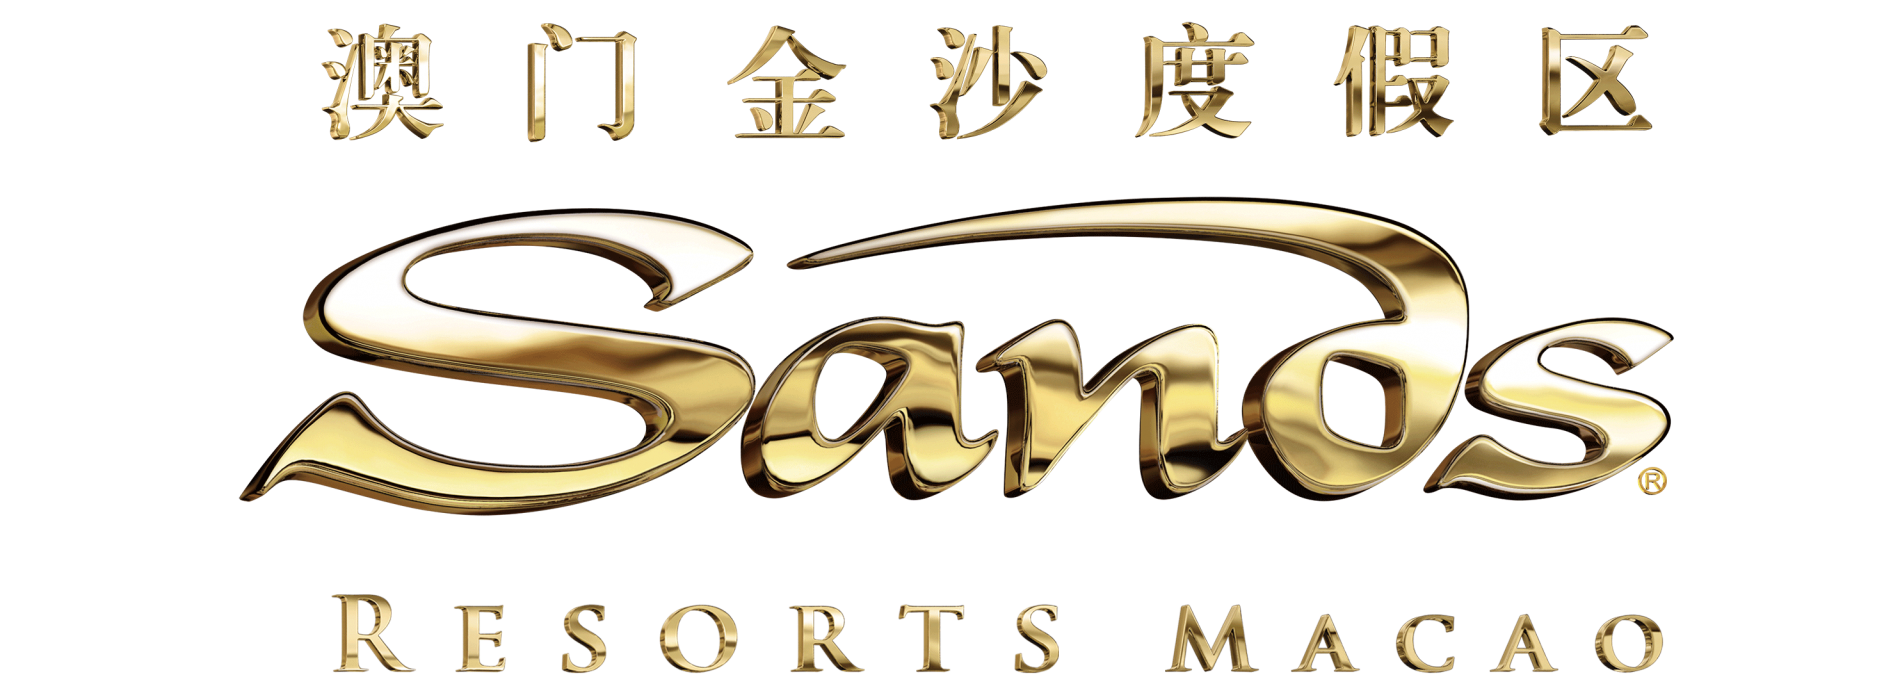 Sands Resorts Macao returns as Platinum Partner of MILT Congress in Mumbai and New Delhi